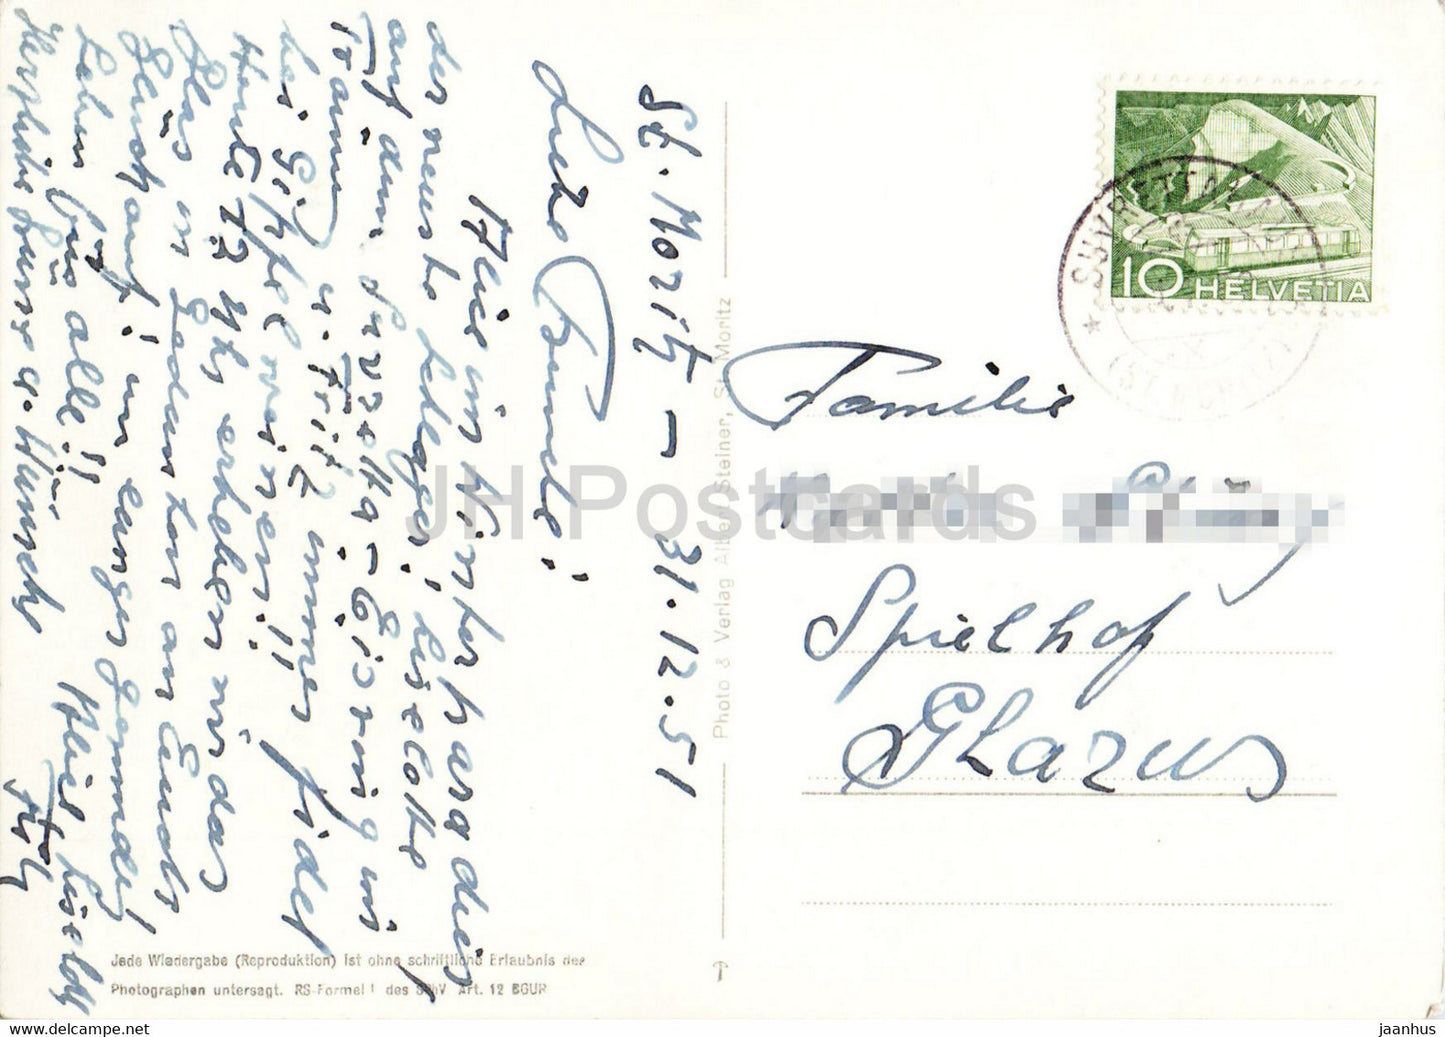 St Moritz - Oberalpina - 5835 - 1951 - old postcard - Switzerland - used